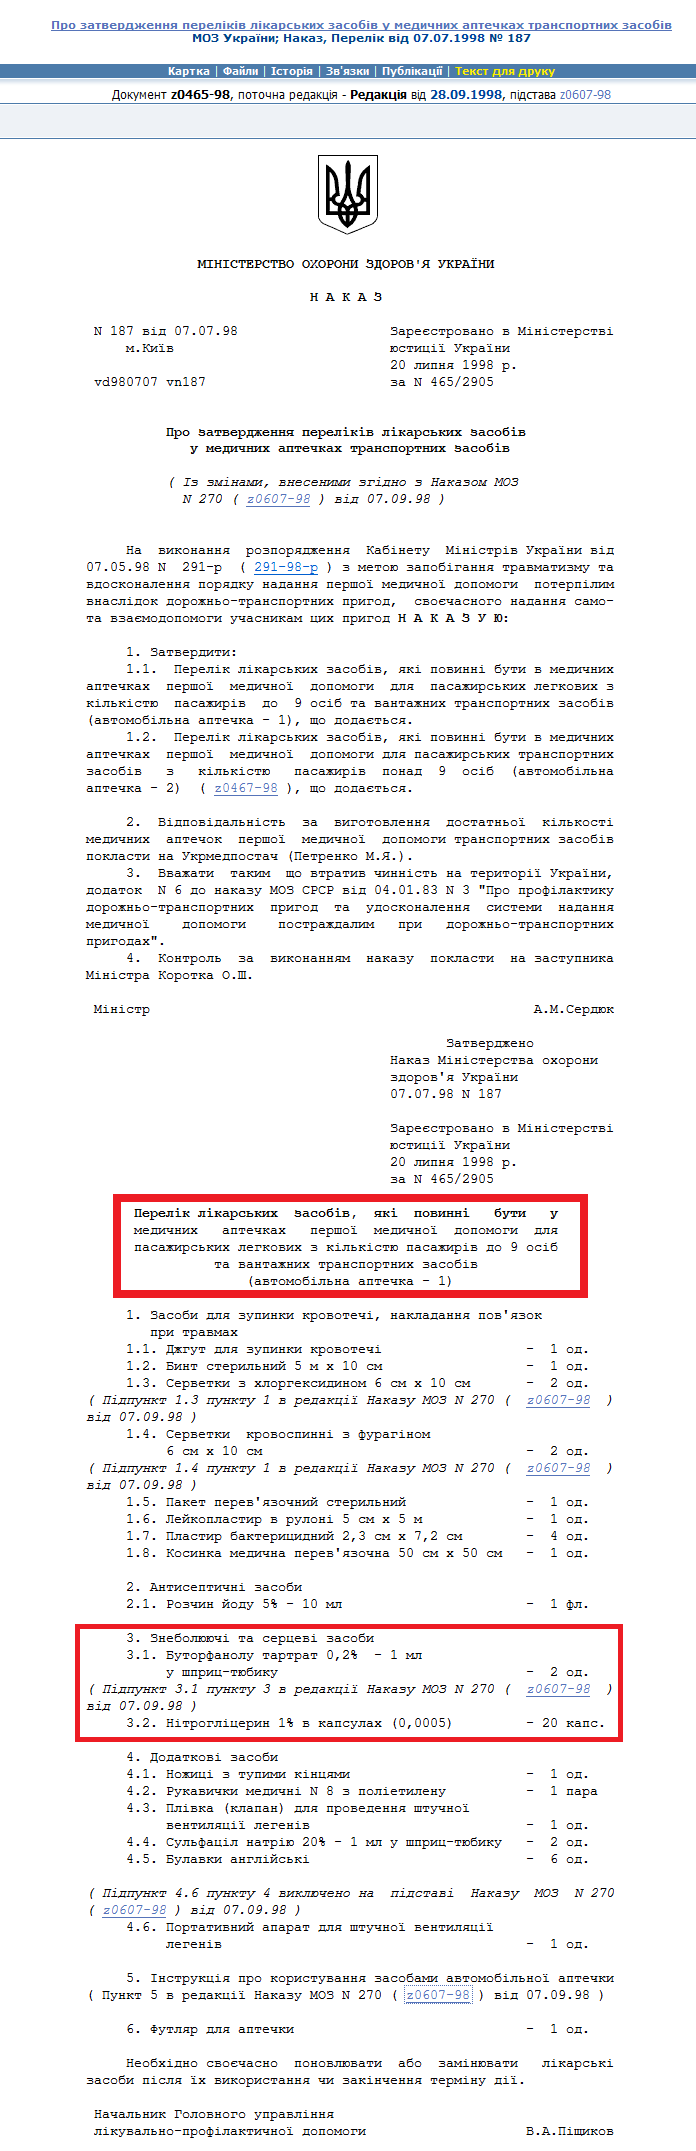 http://zakon2.rada.gov.ua/laws/show/z0465-98